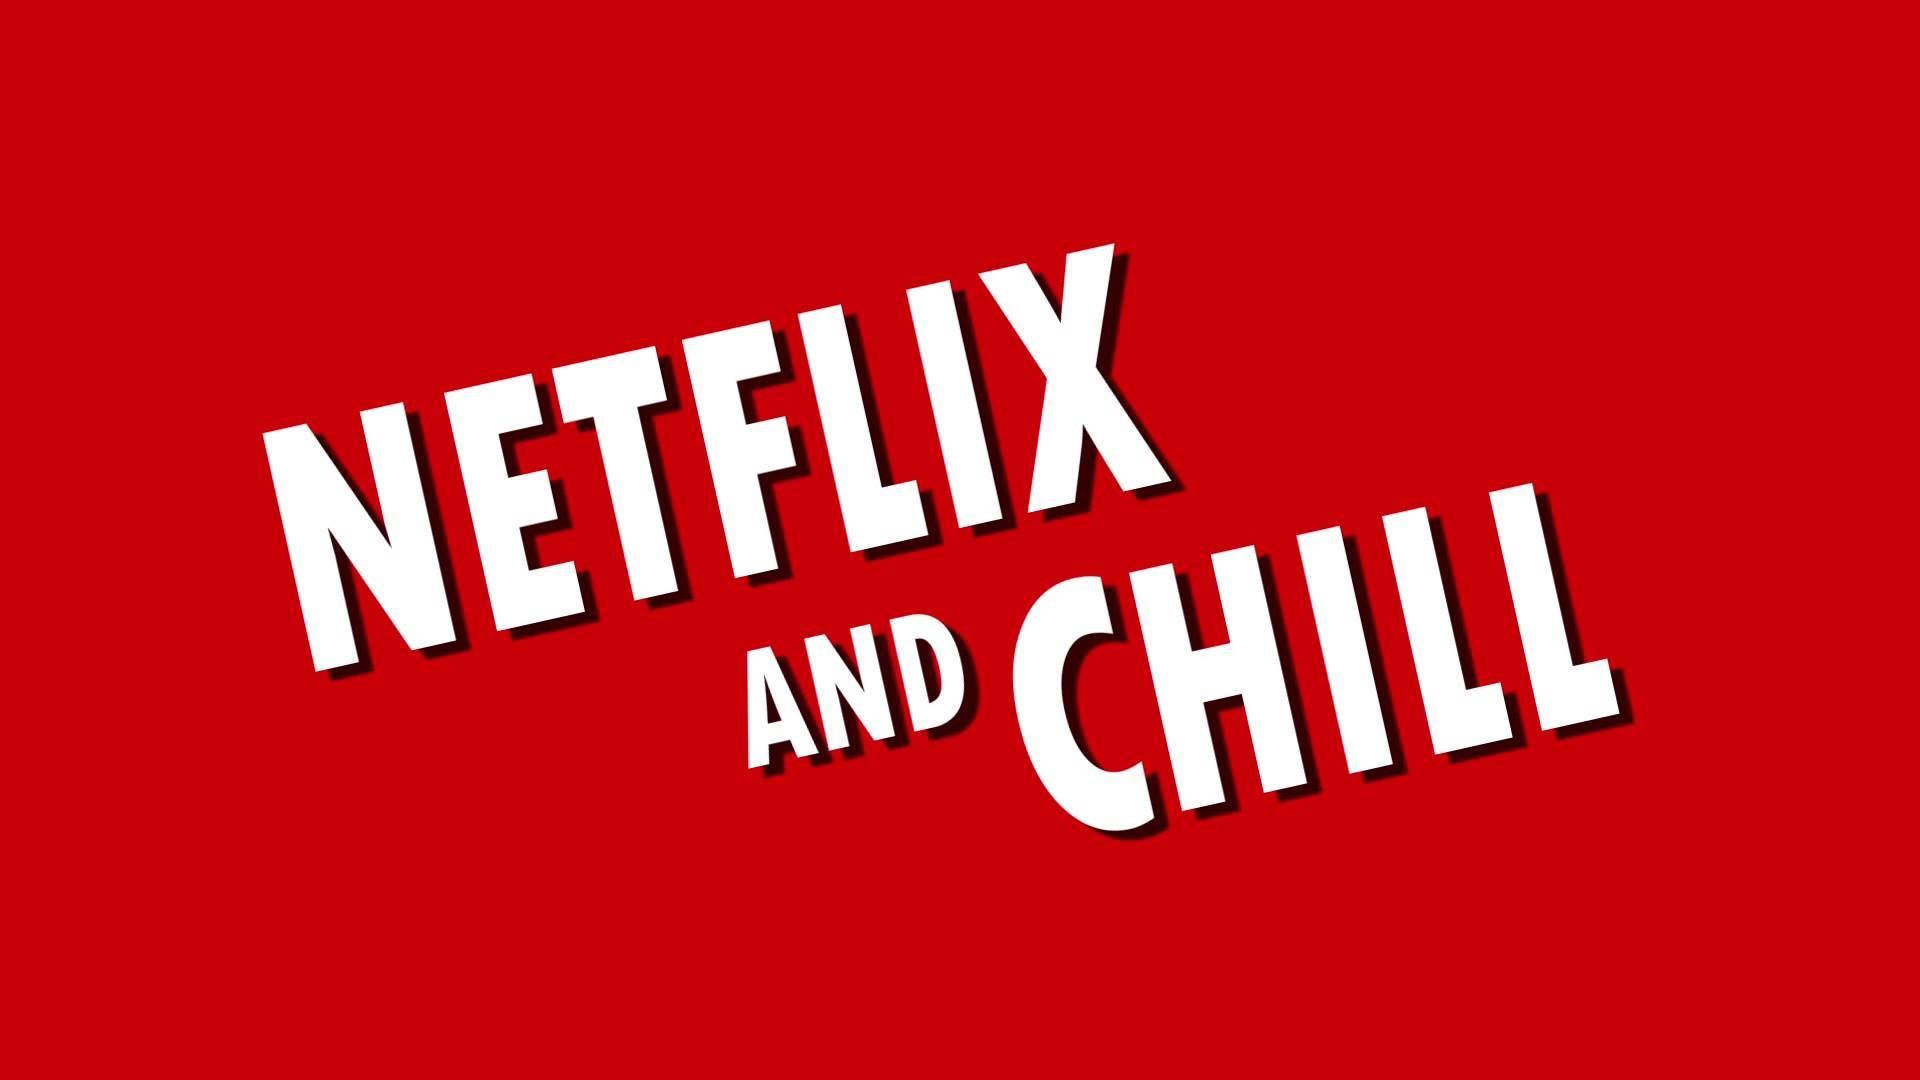 Netflix And Chill Background